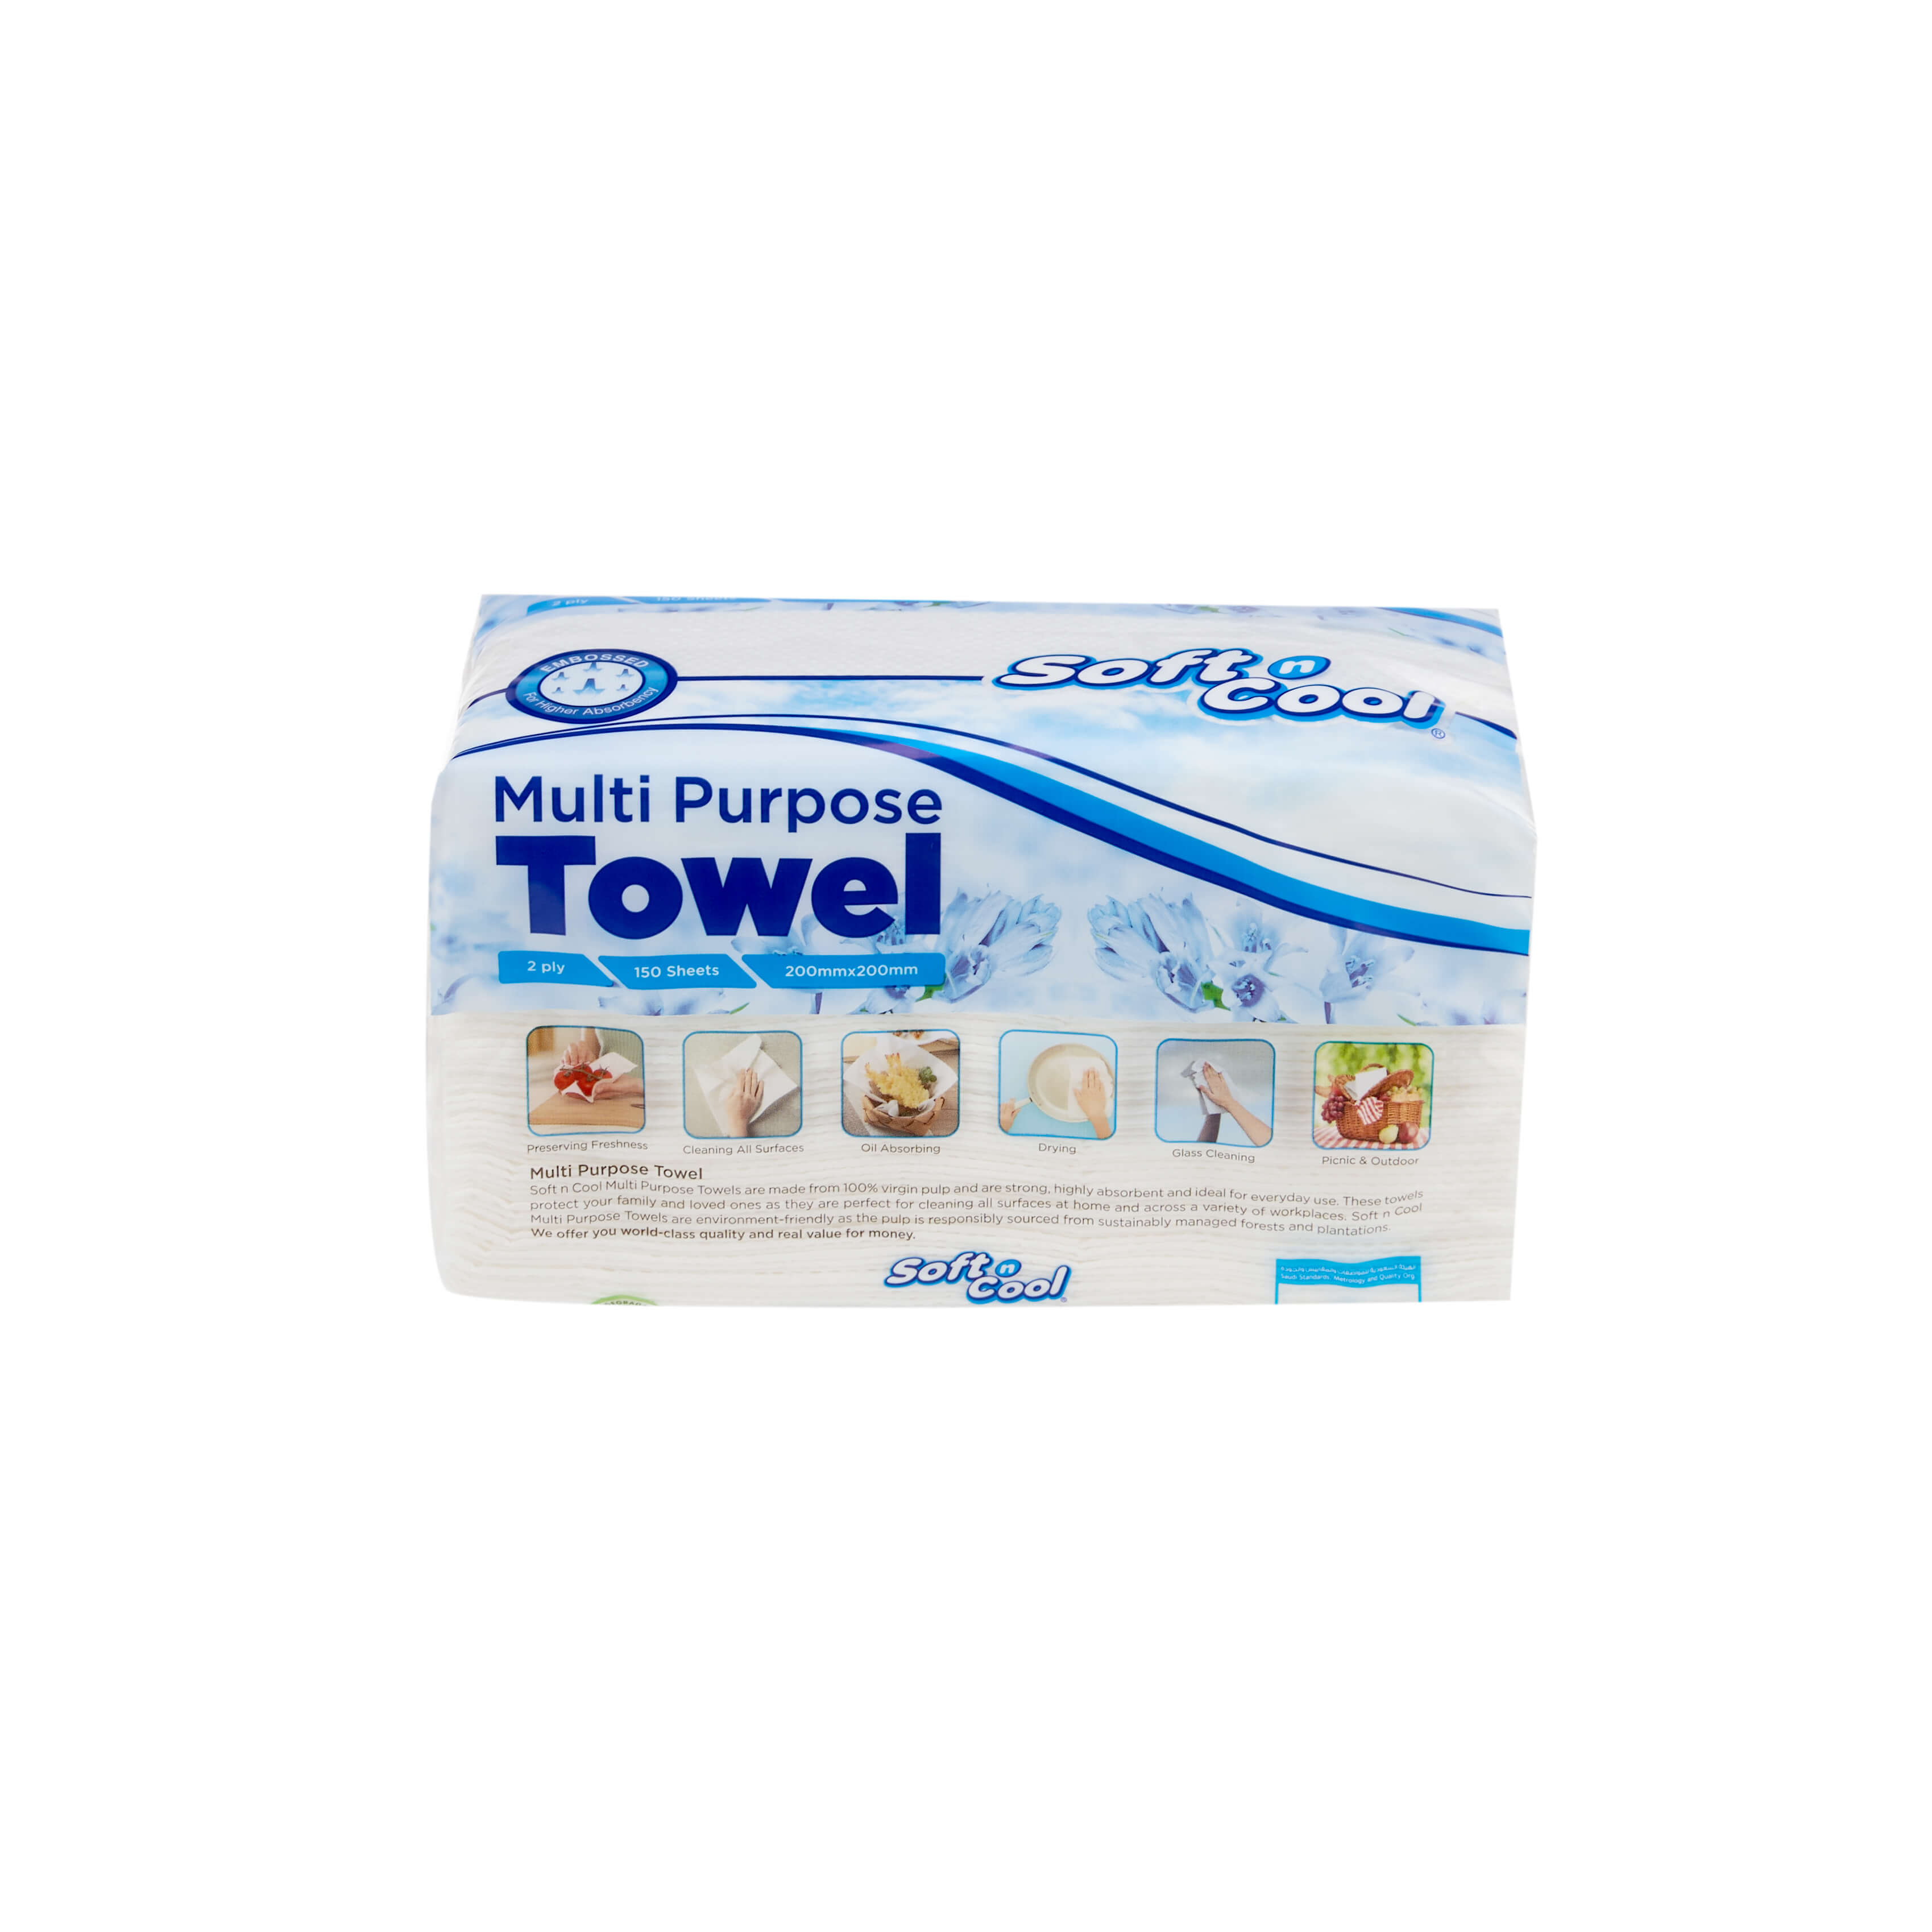 Soft n Cool Multi Purpose Towel 150 Sheets x 2 ply - hotpackwebstore.com